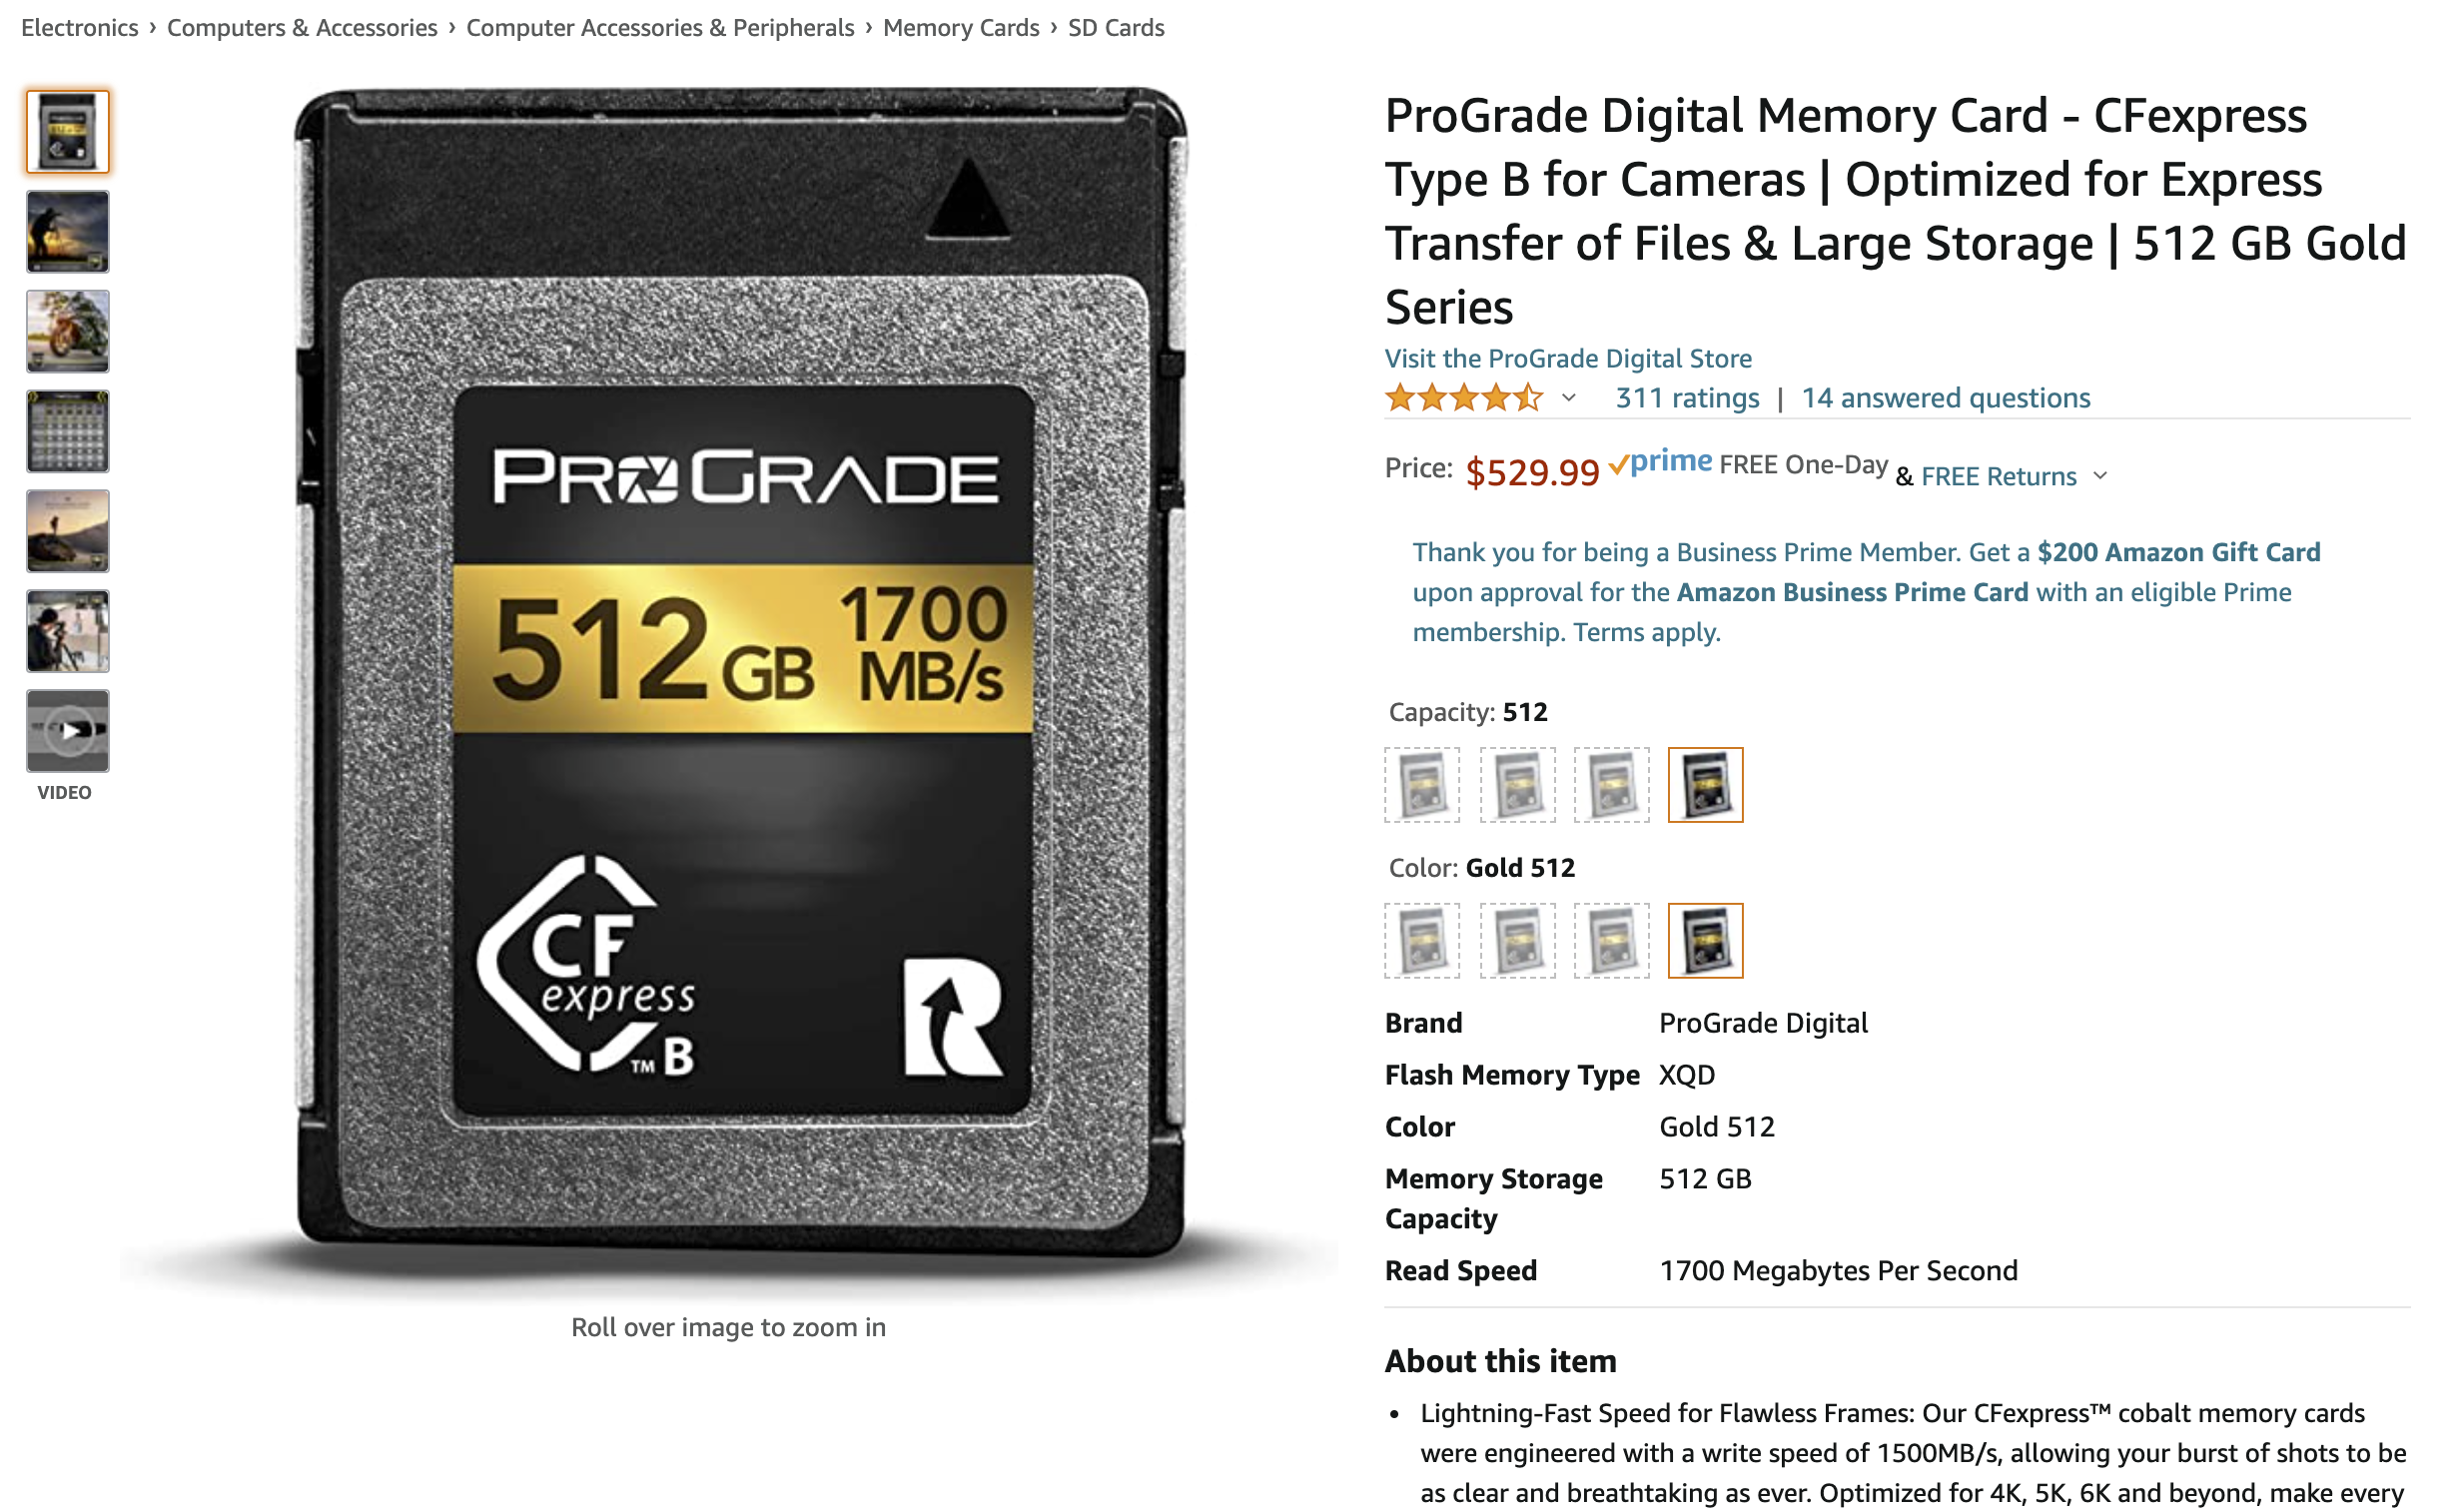 Exclusive Deal: 15% off ProGrade Digital CFExpress Type B 512GB Card